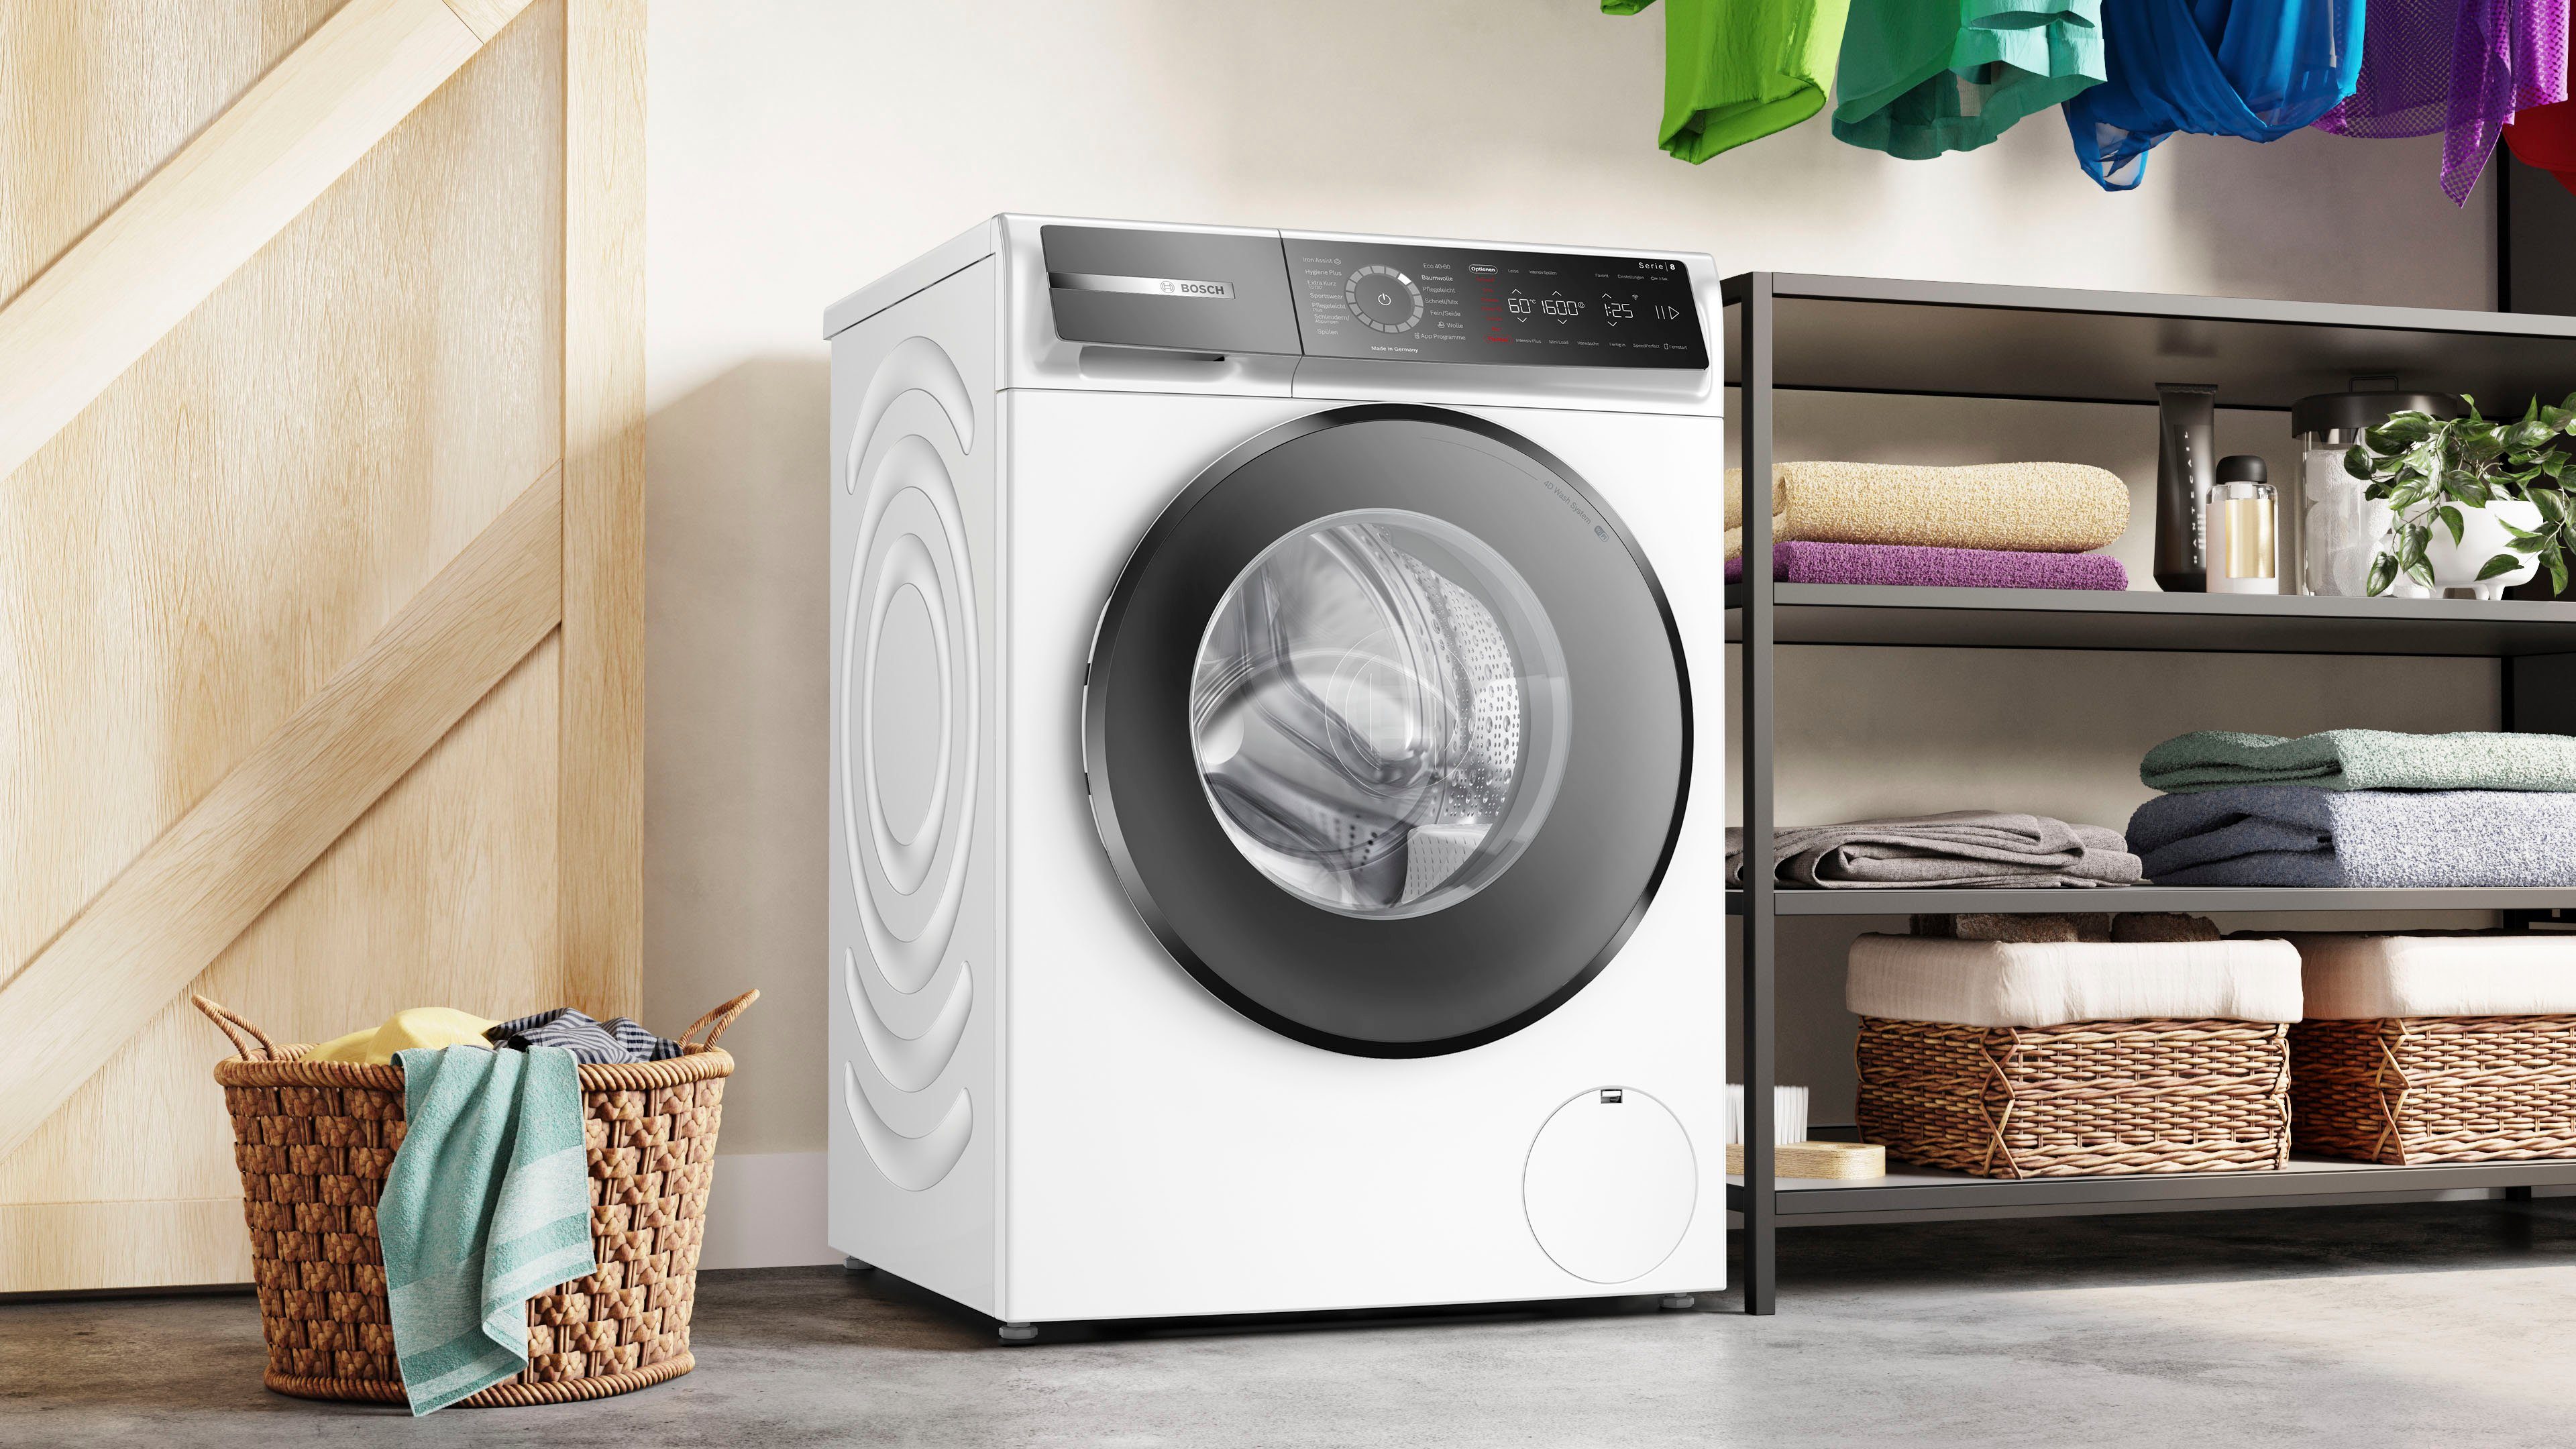 BOSCH Waschmaschine Serie der Falten 8 1600 dank reduziert Dampf % 50 WGB256040, U/min, 10 Assist Iron kg